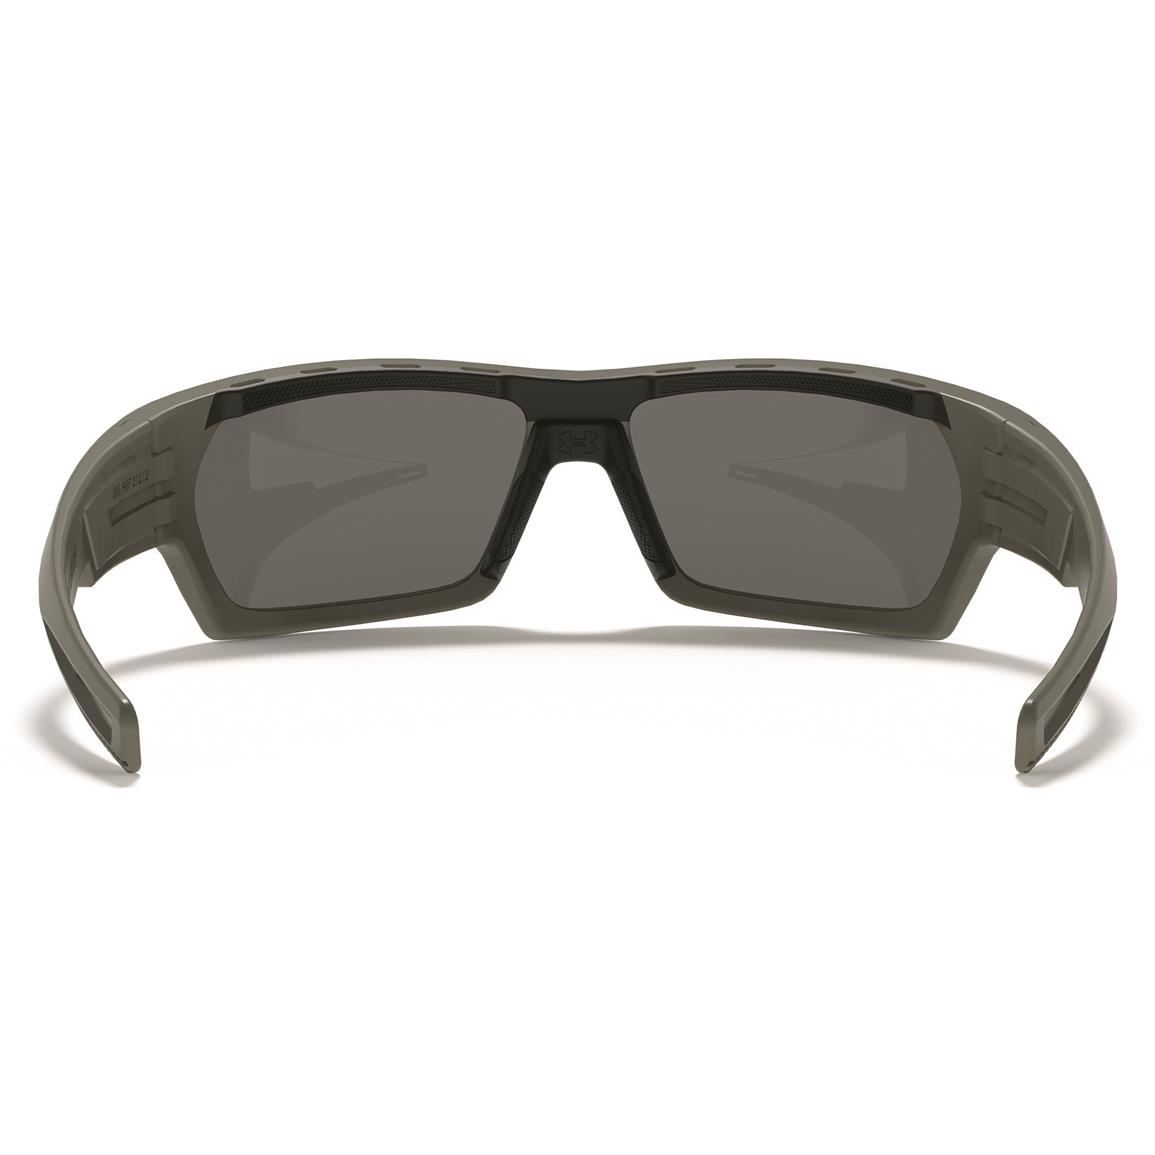 Under Armour Men's Battlewrap Satin Sunglasses - 699668, Sunglasses ...